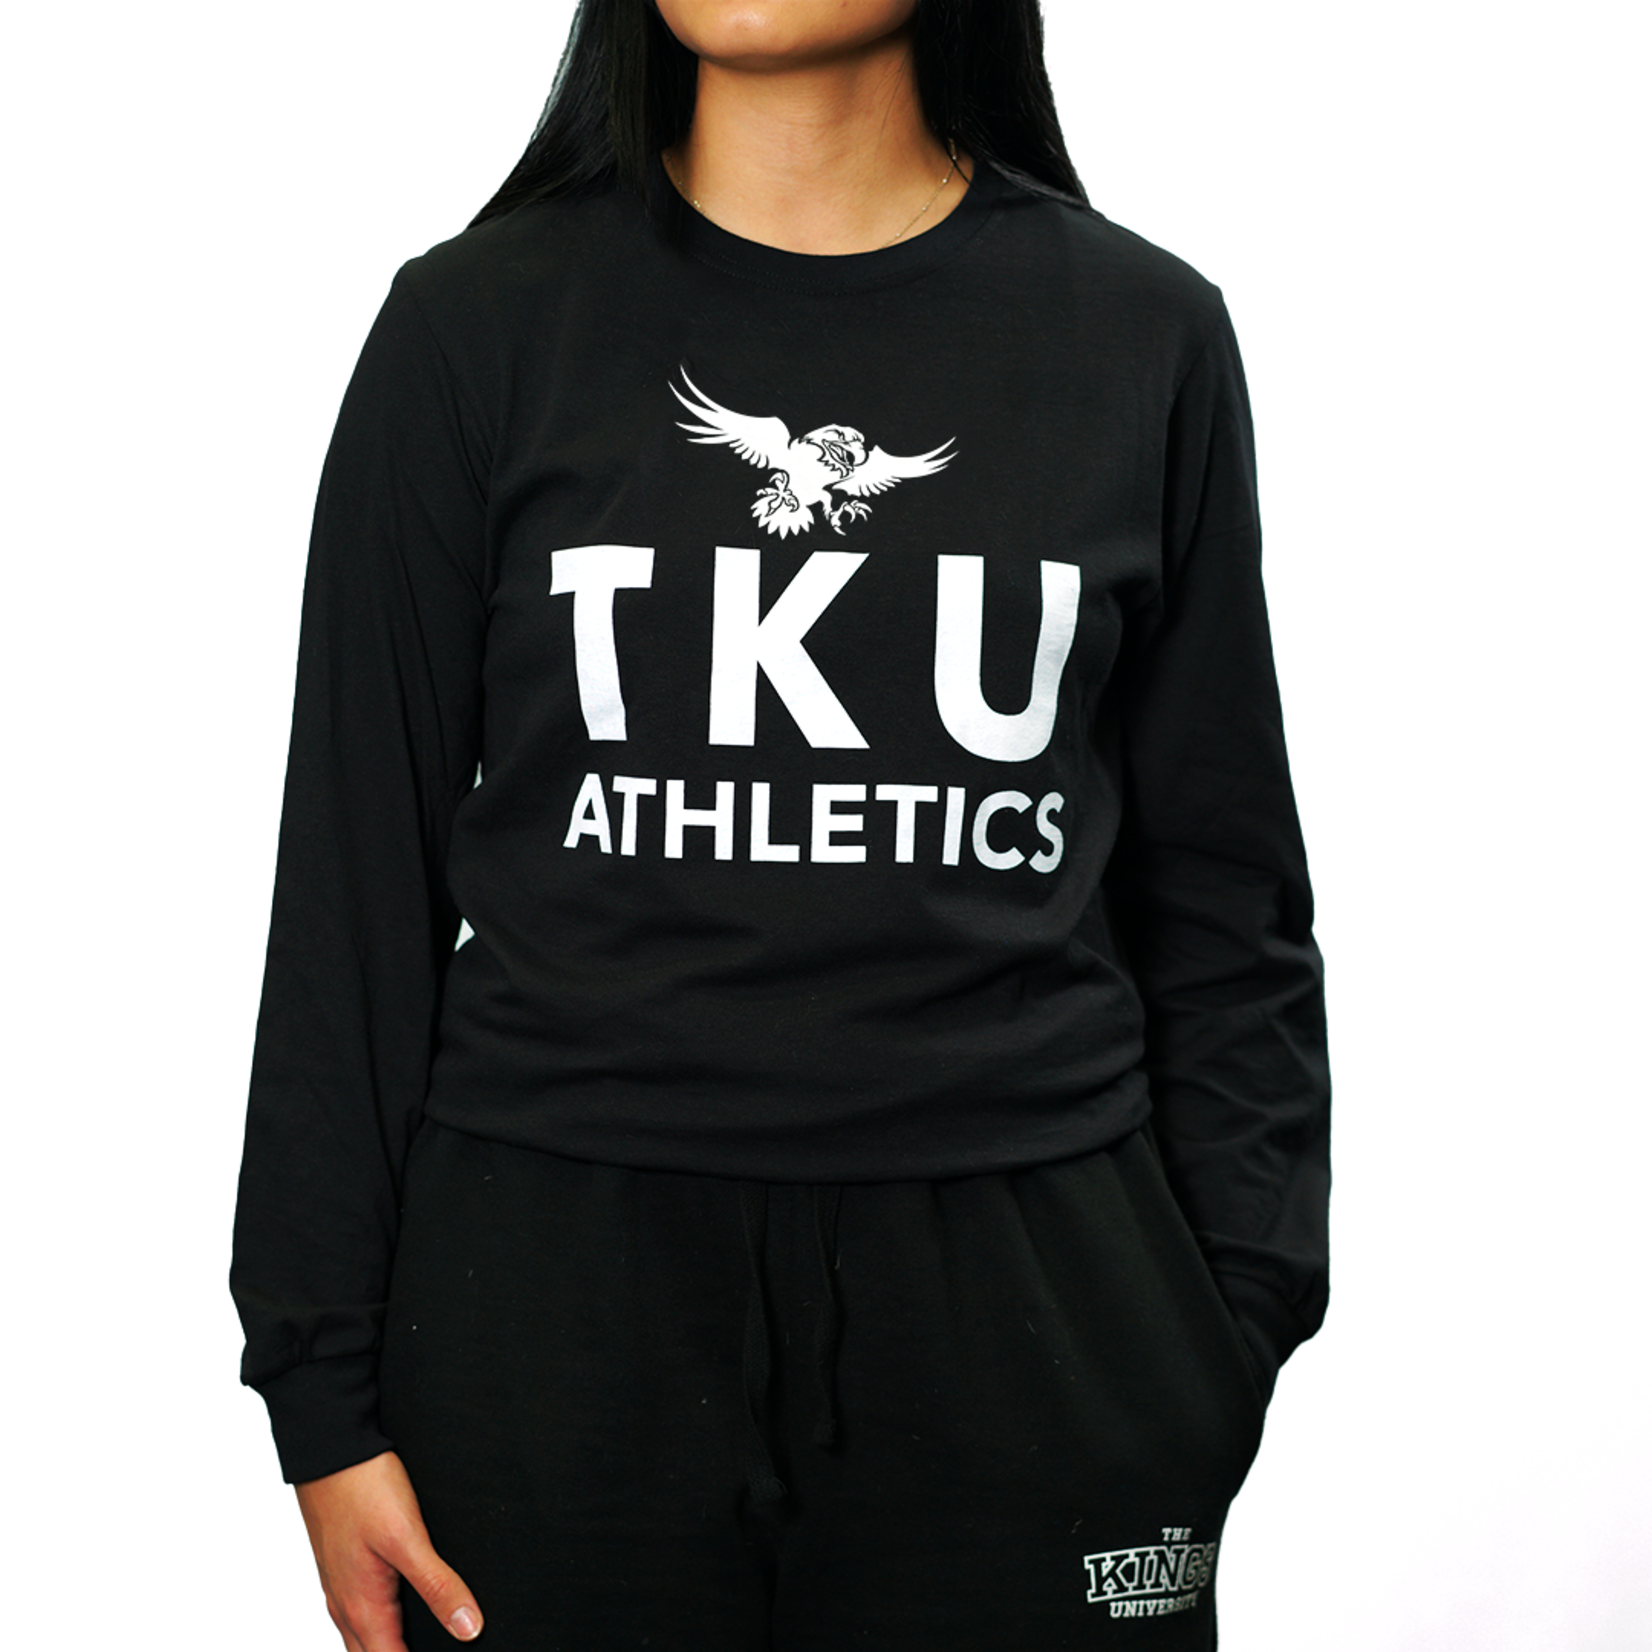 TKU Athletics Long Sleeve